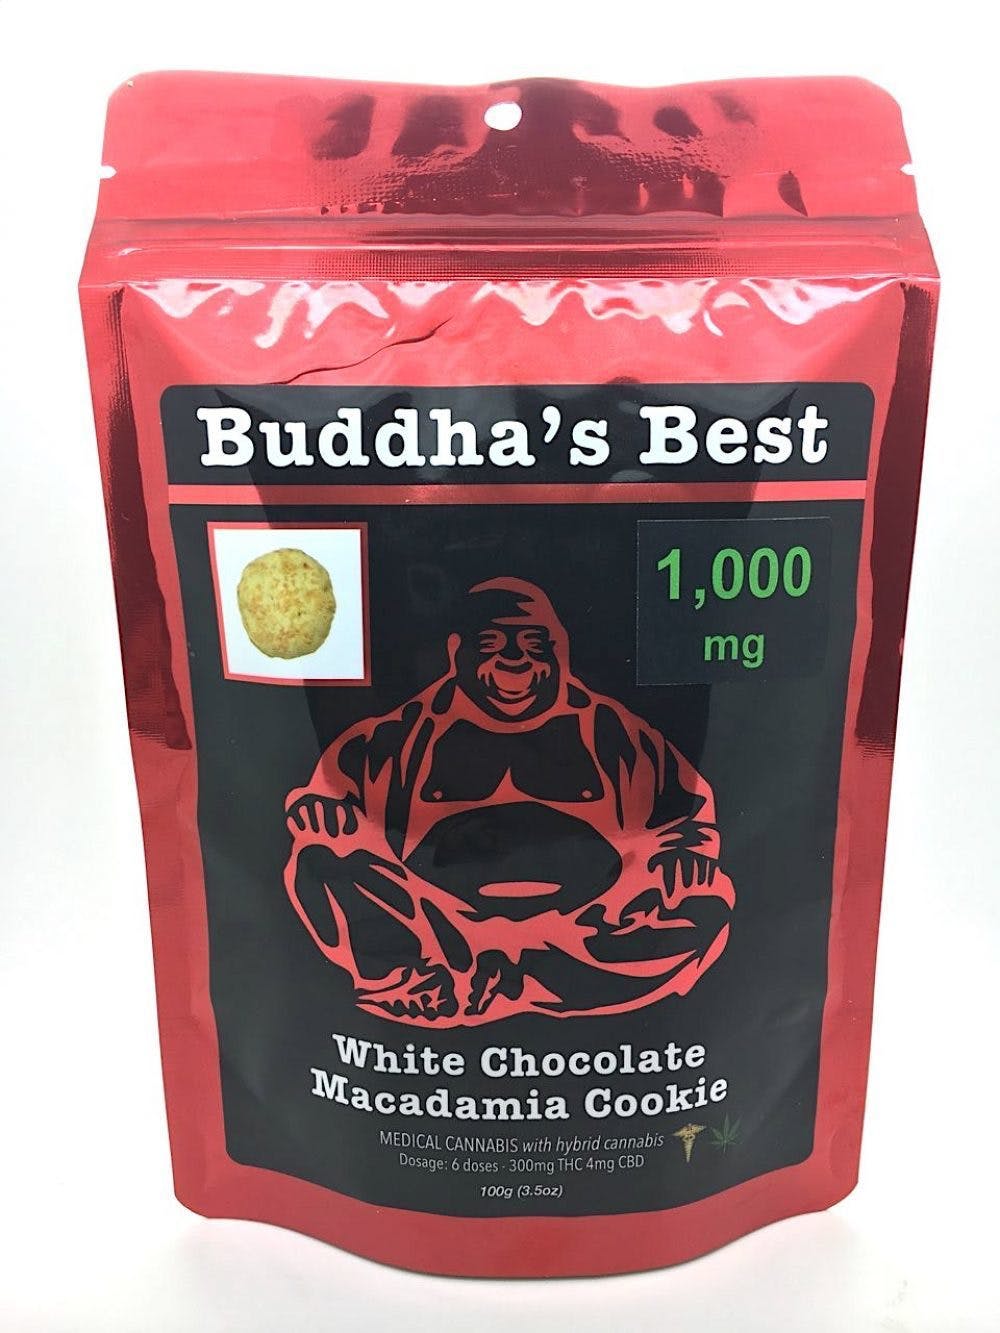 marijuana-dispensaries-27-spectrum-pointe-suite-305-lake-forest-buddhas-best-white-macadamia-cookie-1000mg